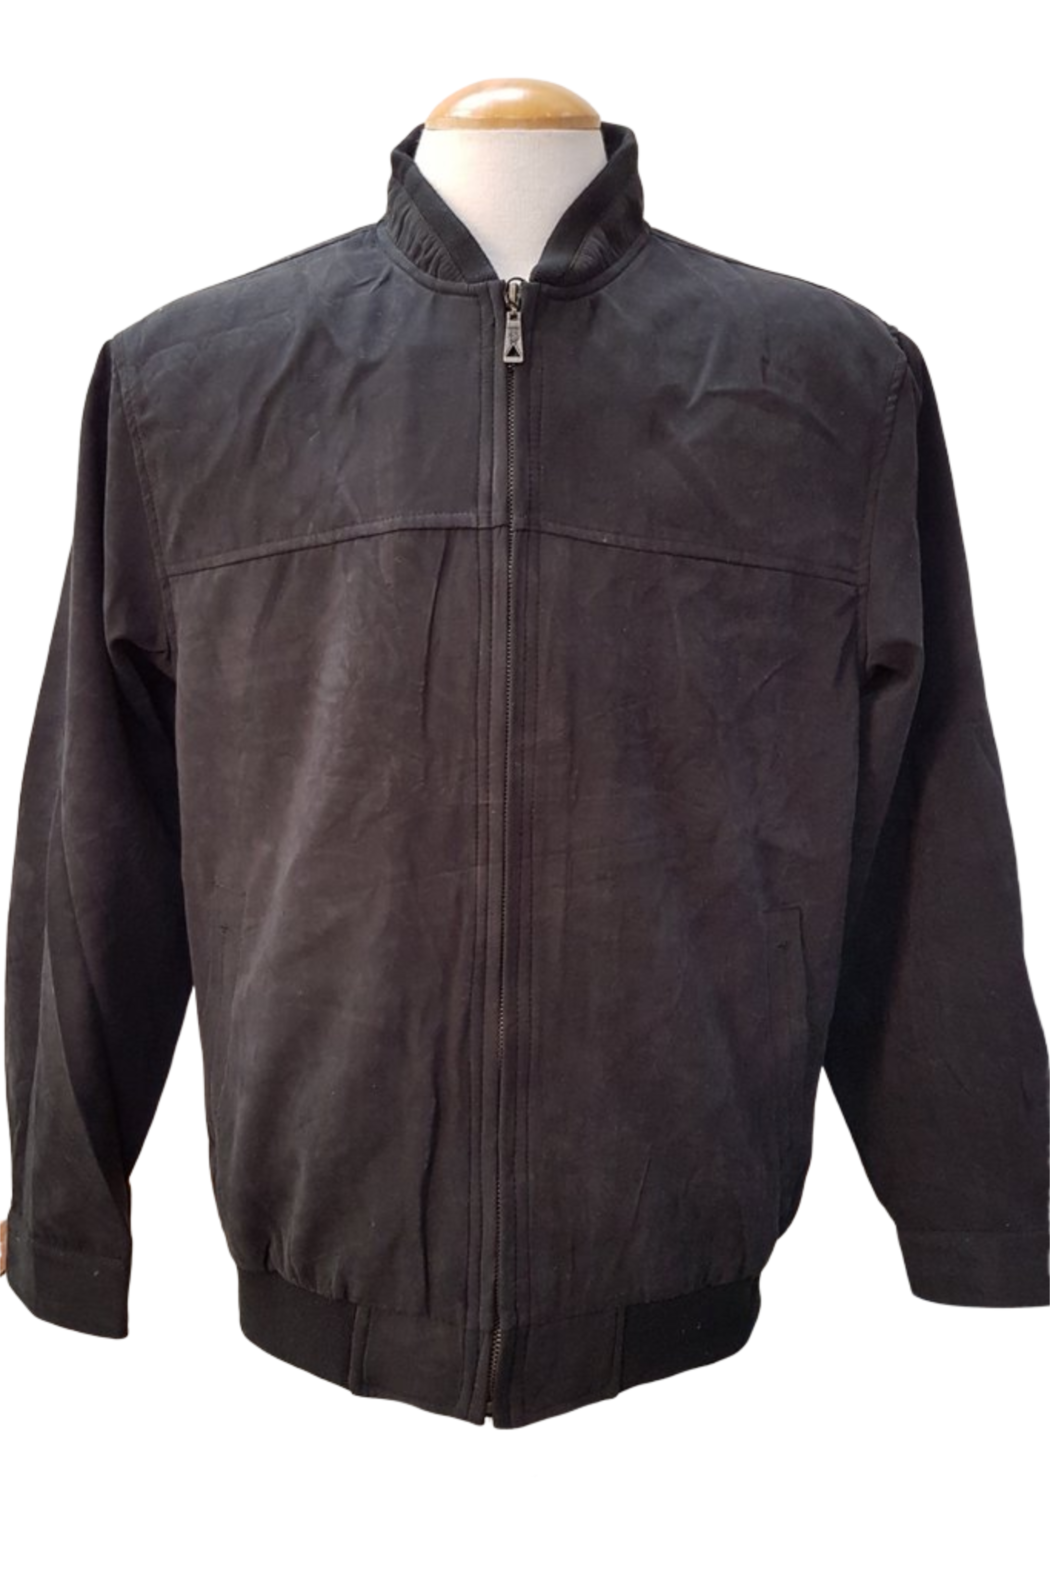 Saxon Microfibre Jacket #20938